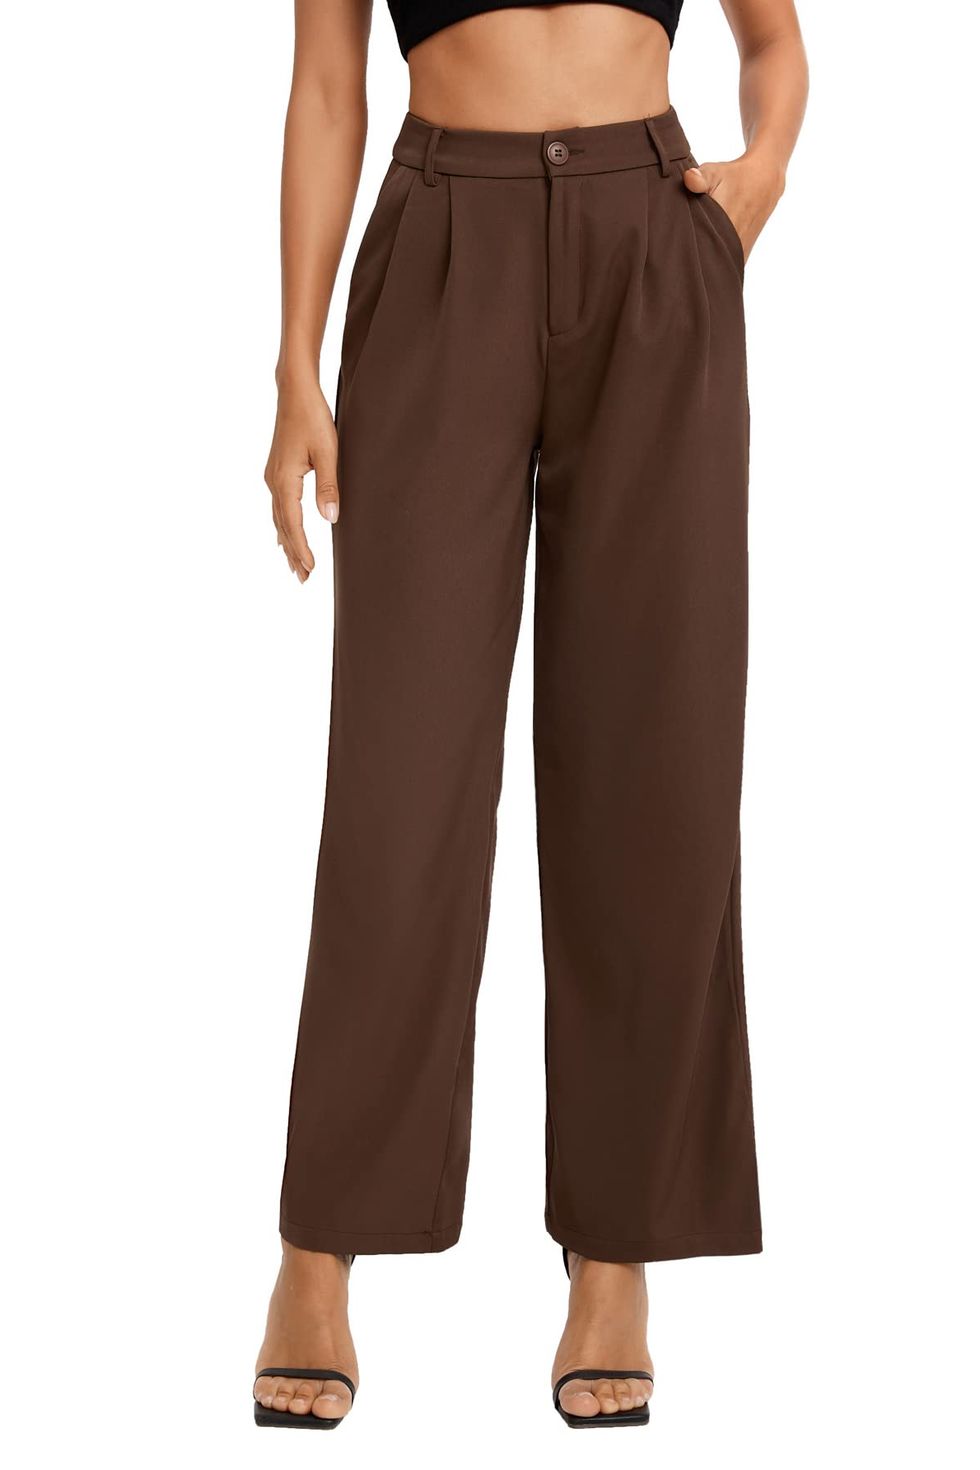 Brown Wide Leg Women Classic Suit Pants Vintage Office Elegant Casual Balck  Trousers Female High Wasit Pants (Color : Brown, Size : XX-Large) :  : Clothing, Shoes & Accessories